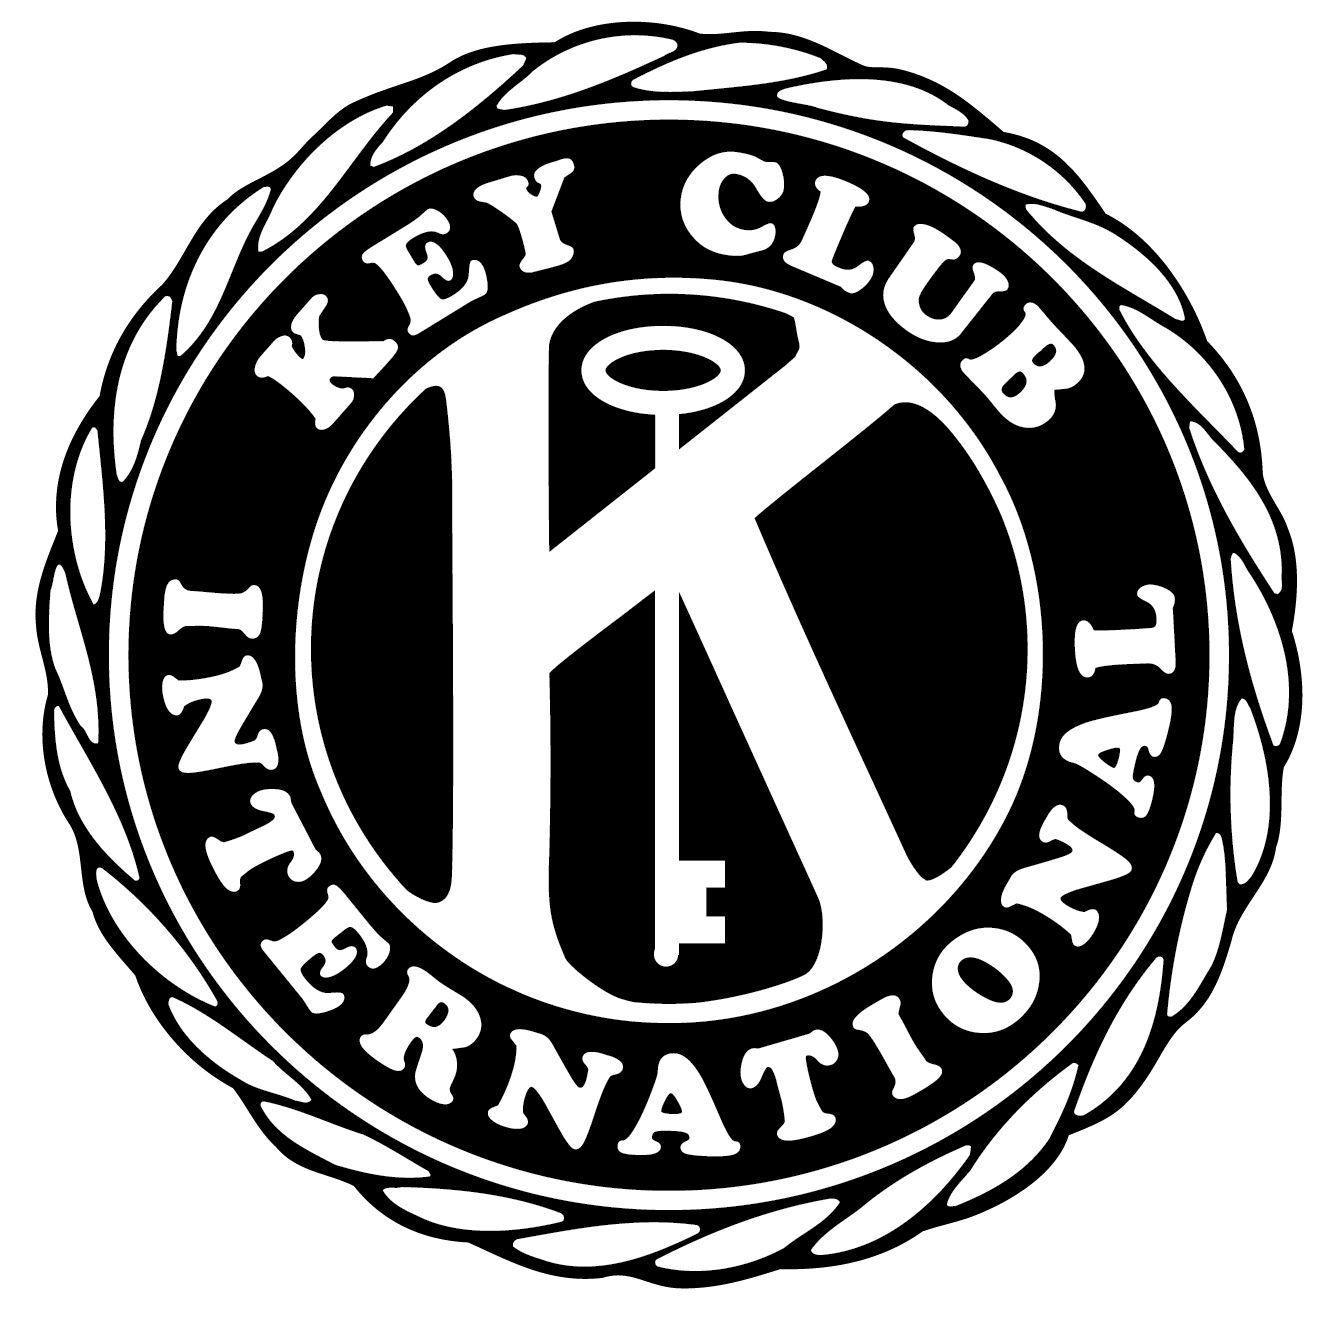 Seal Black and White Logo - Key Club seal